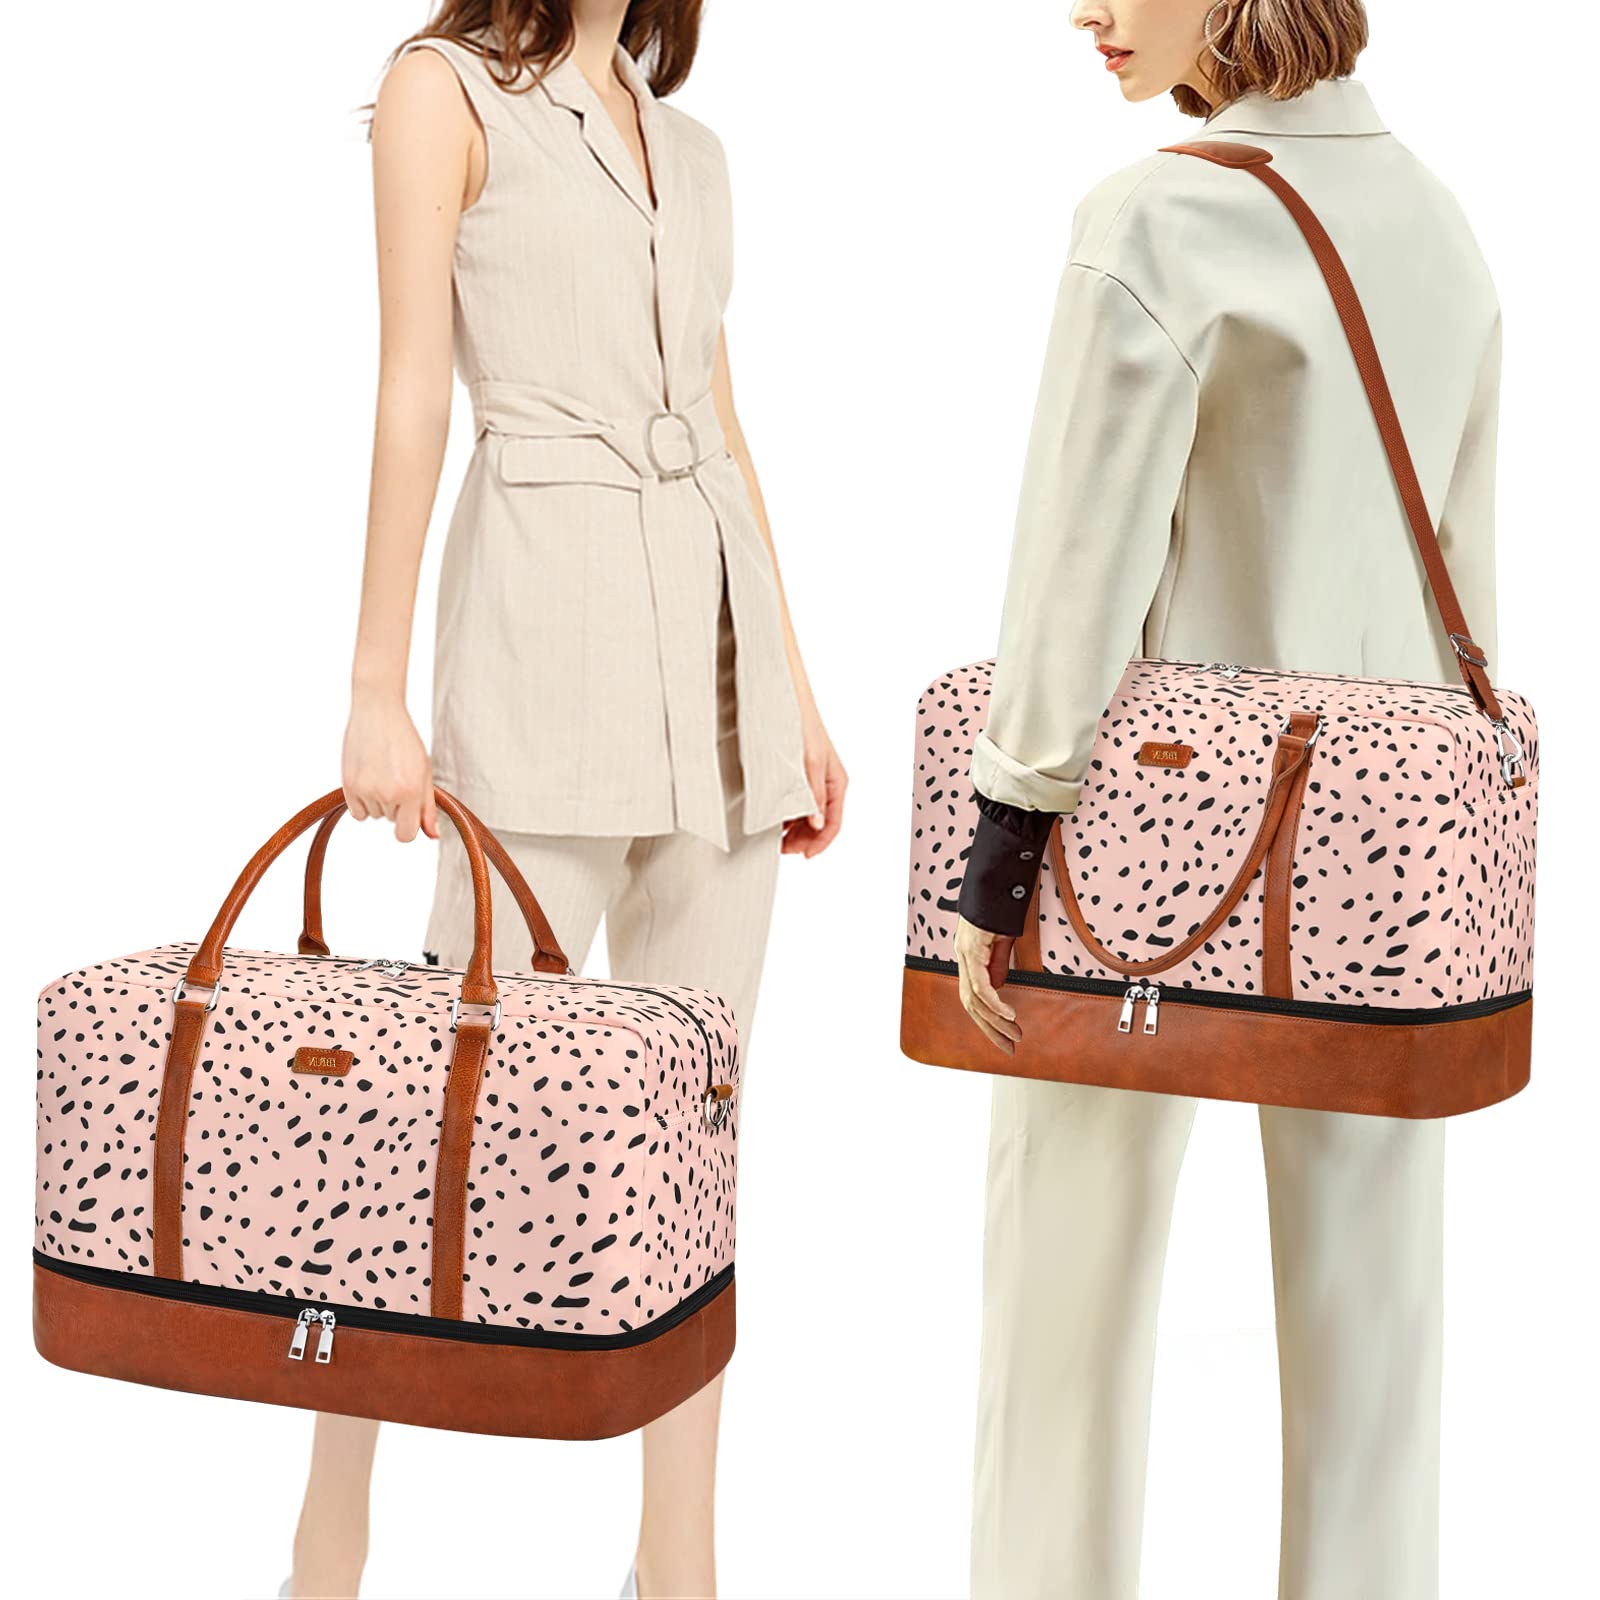 Weekender Bags for Women-I1601